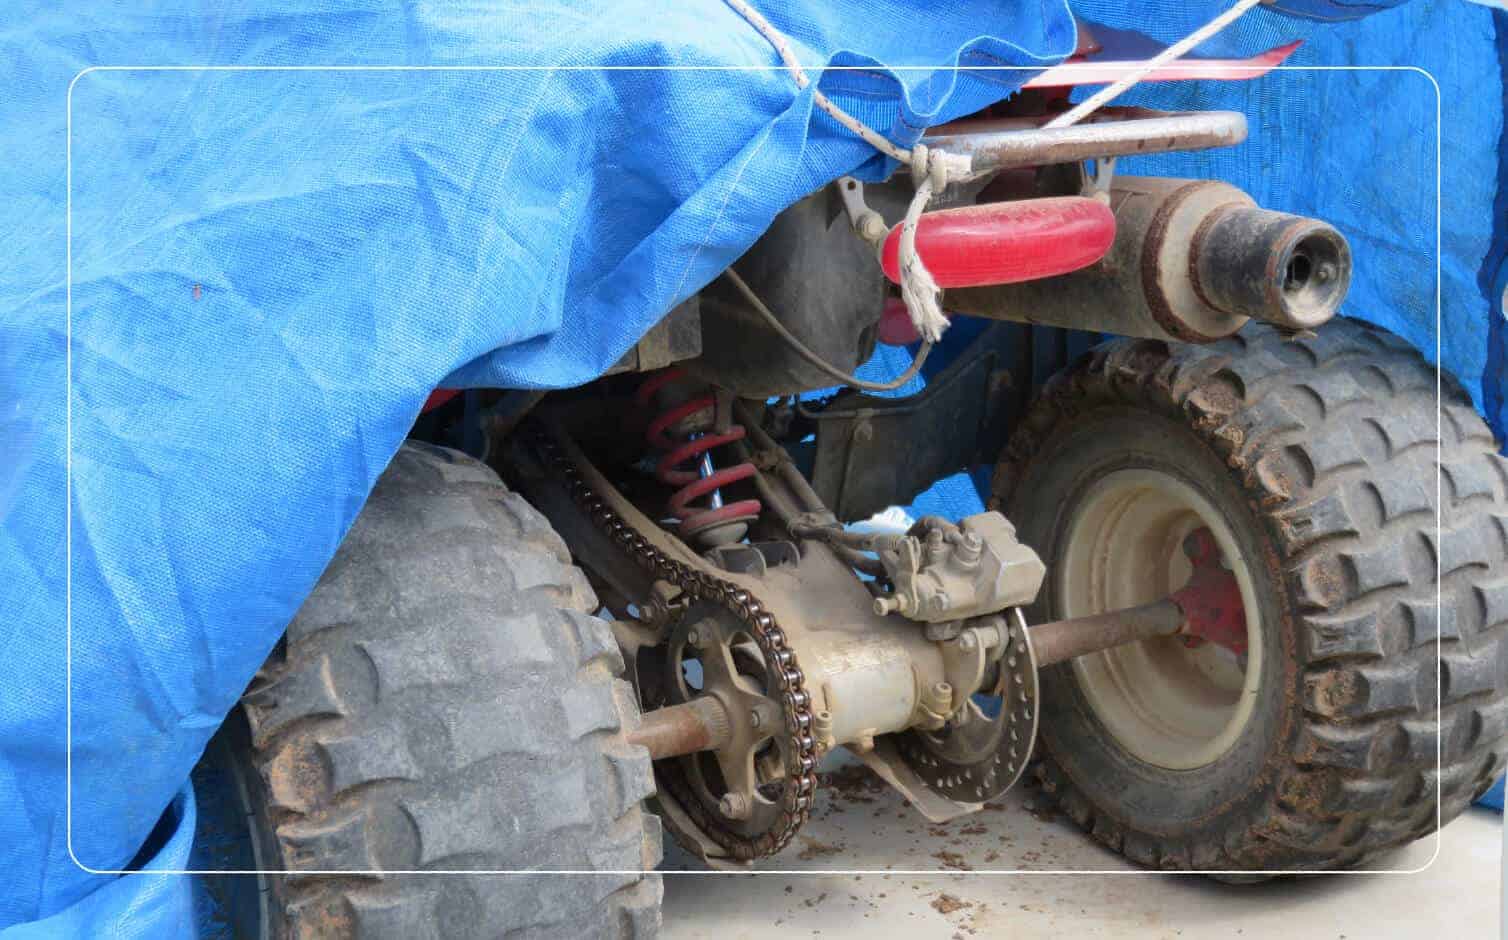 An image of an ATV beneath a blue tarp.